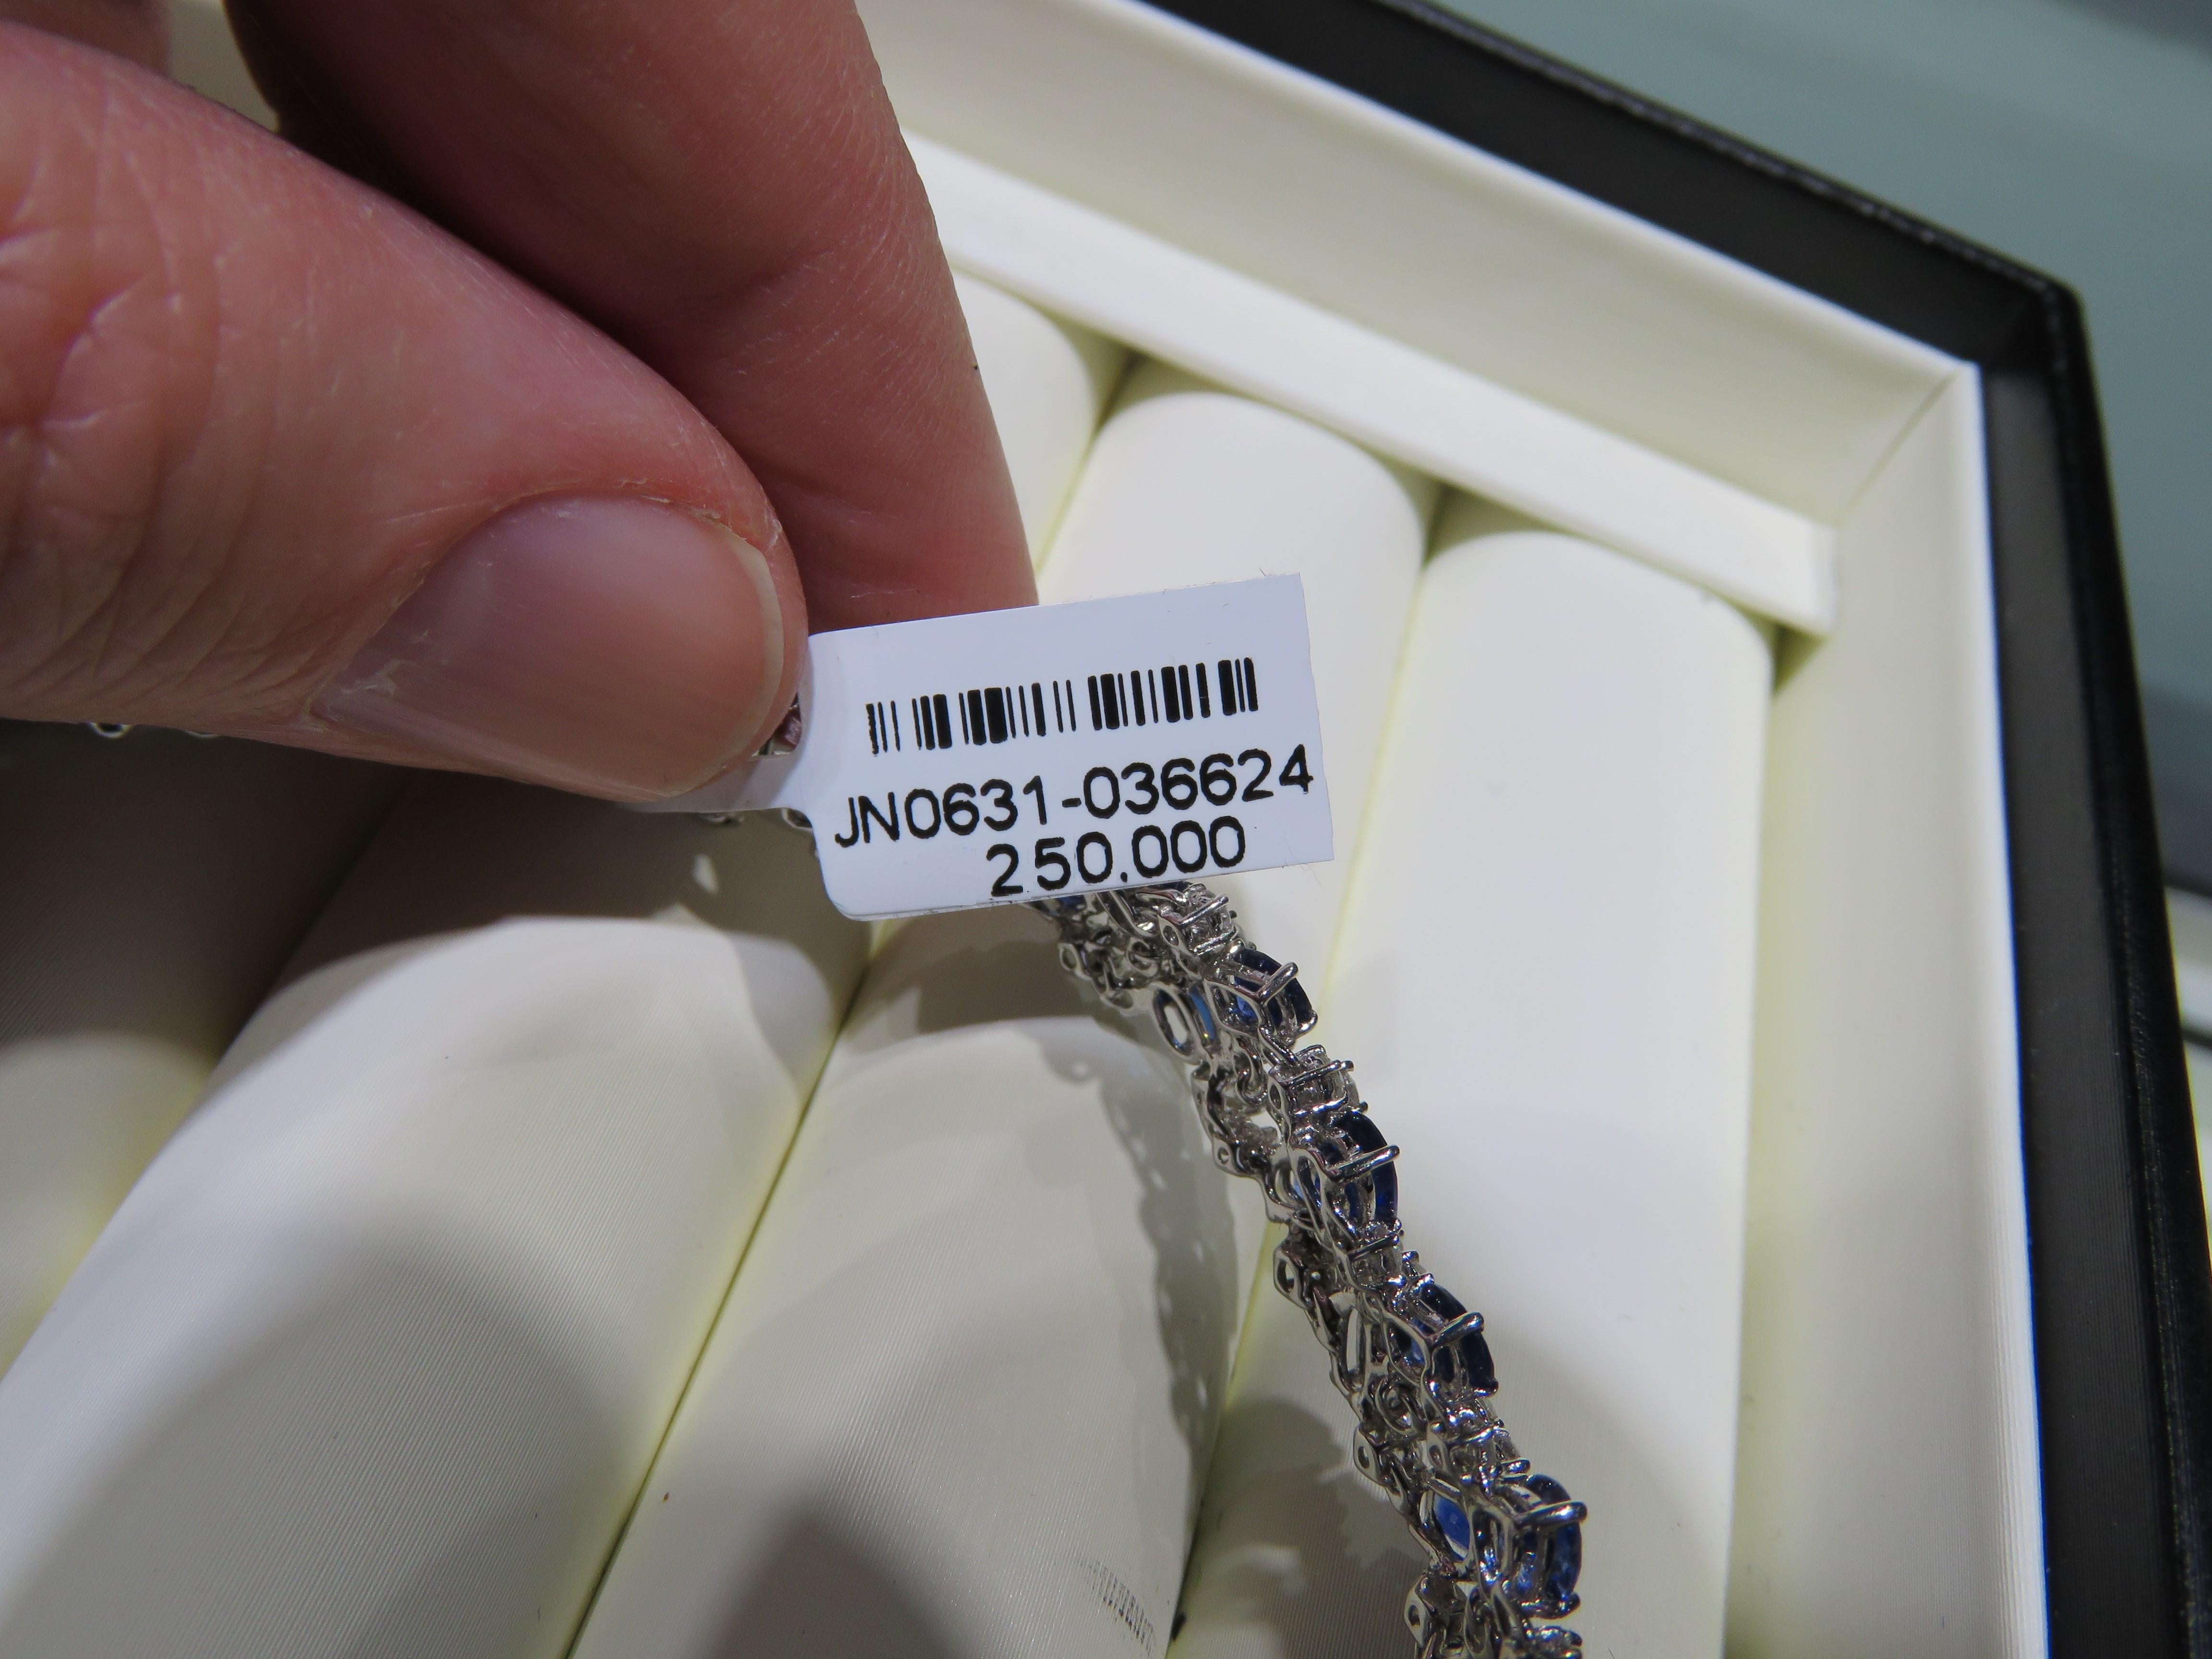 NWT $250, 000 Rare Fancy 18KT Gold Gorgeous Ceylon Sapphire Diamond Necklace For Sale 3